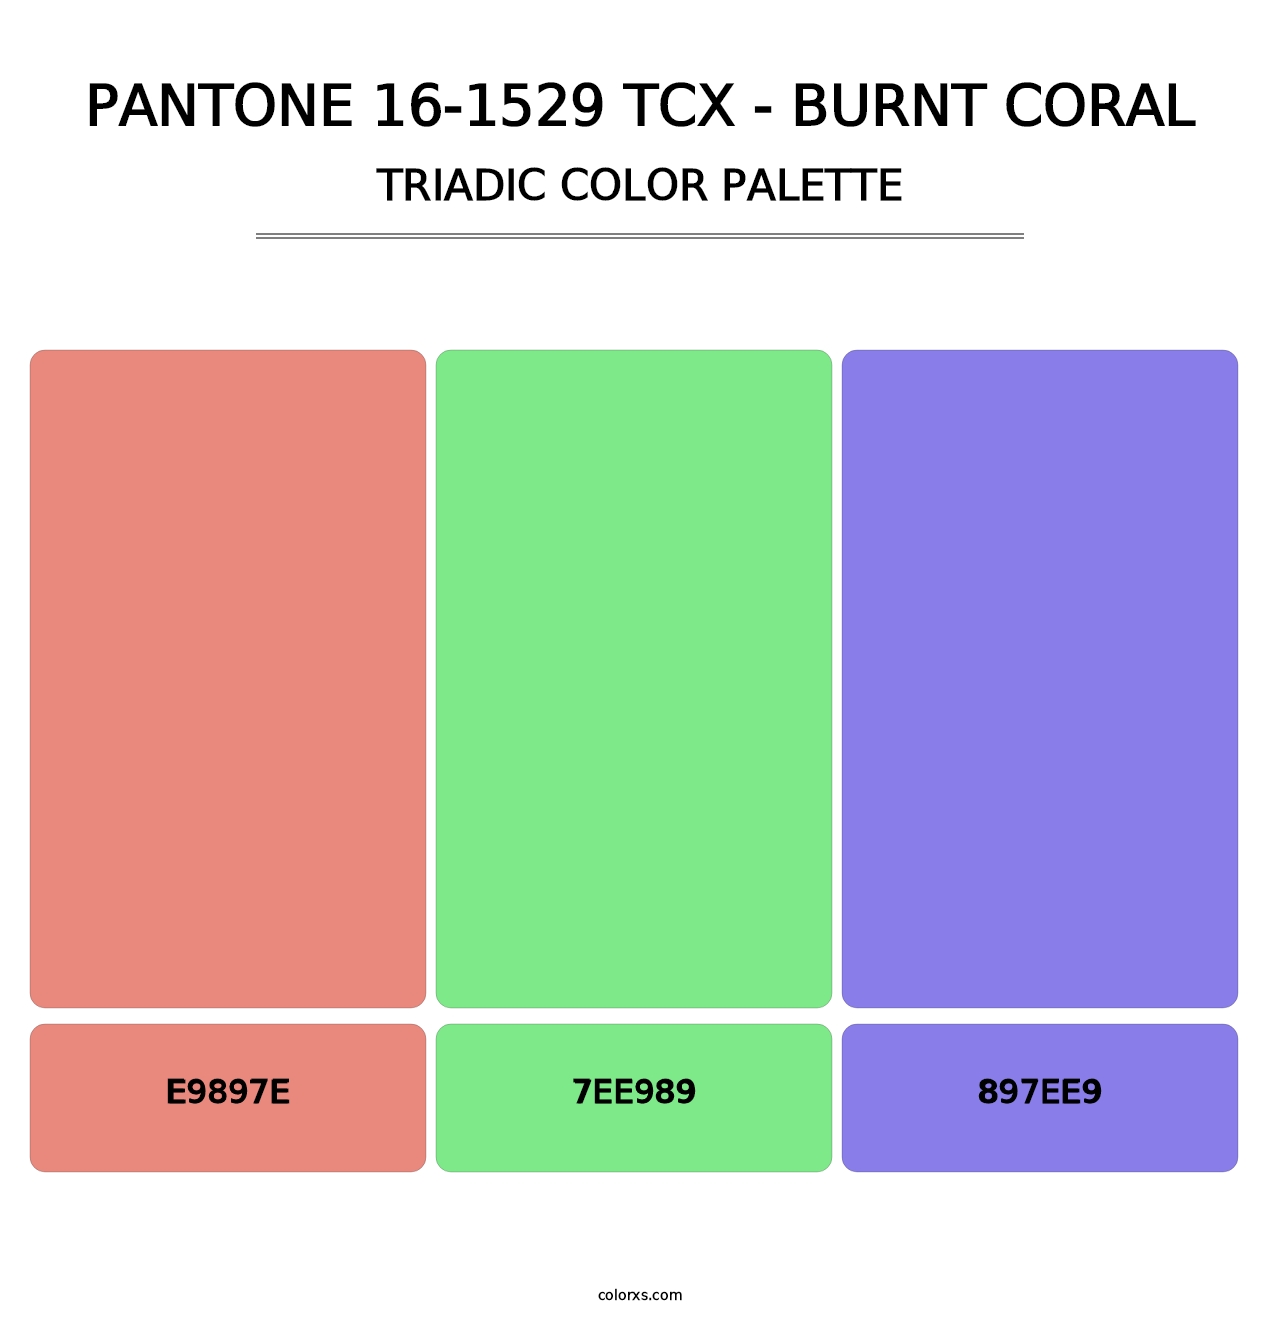 PANTONE 16-1529 TCX - Burnt Coral - Triadic Color Palette